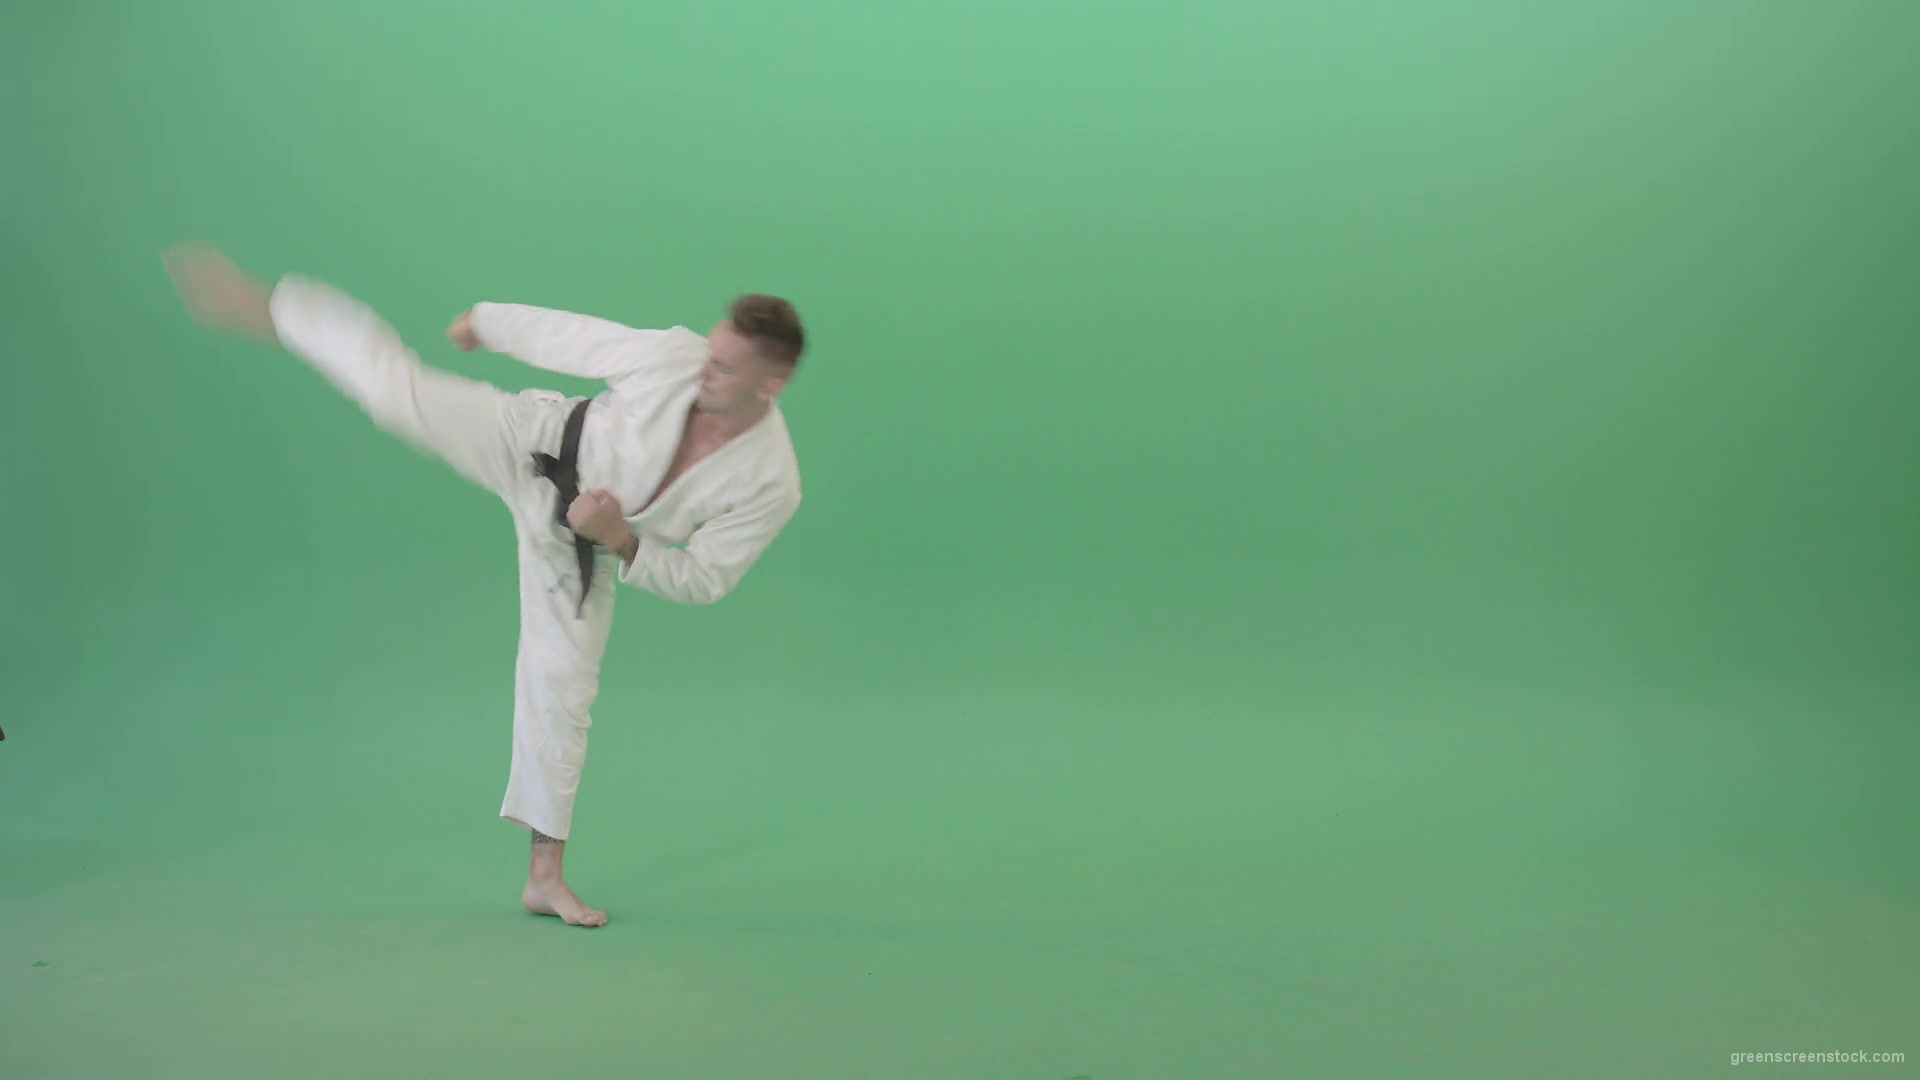 Karate-Sport-man-make-side-kick-isolated-on-green-screen-4K-Video-Footage-1920_007 Green Screen Stock